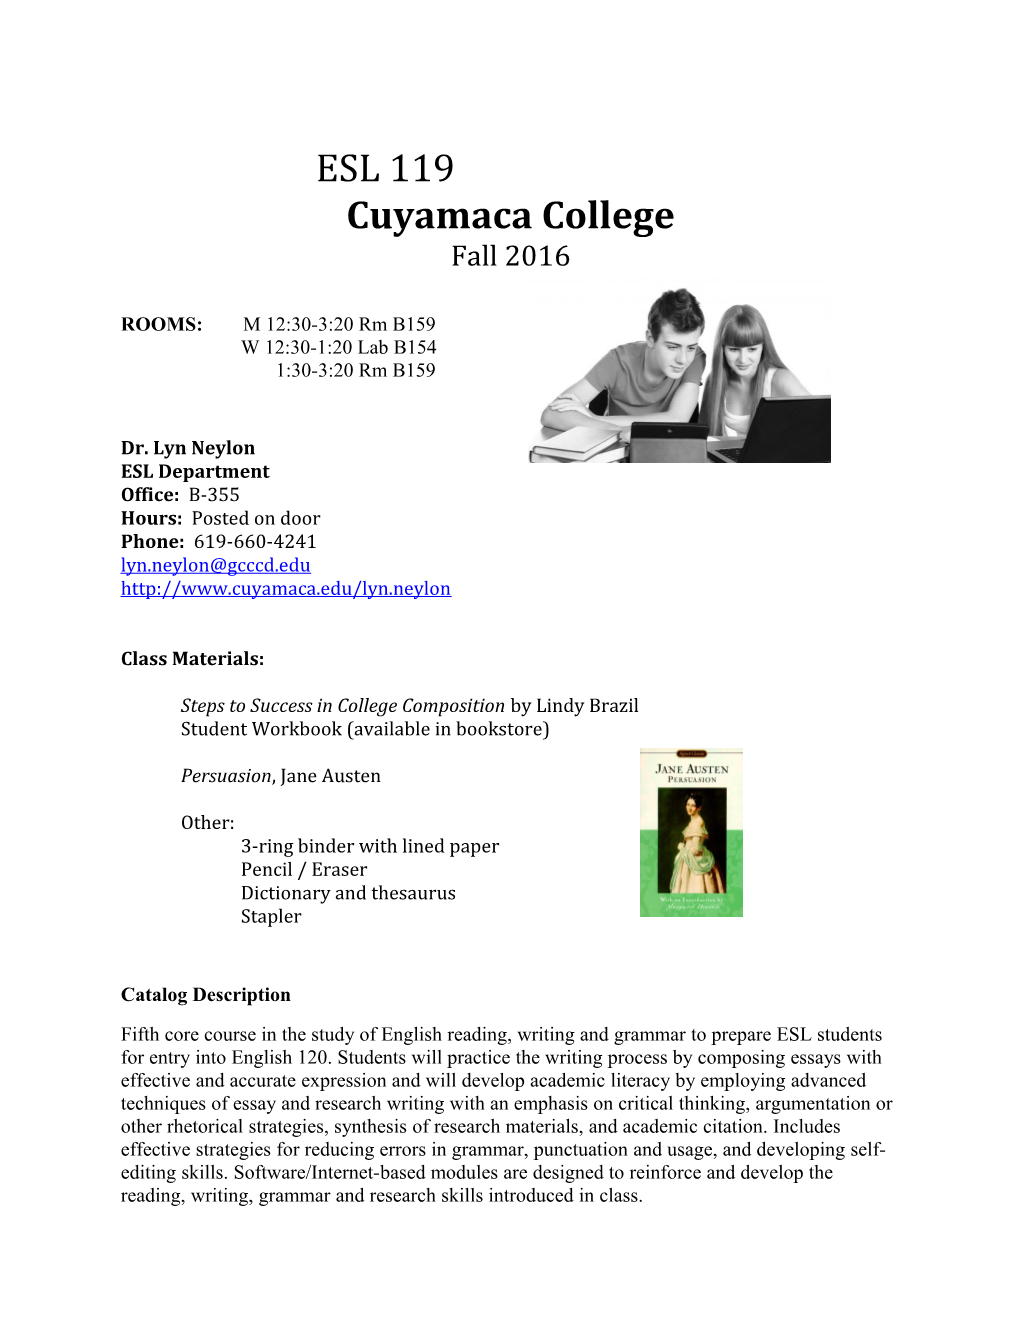 ESL 119 Cuyamaca College